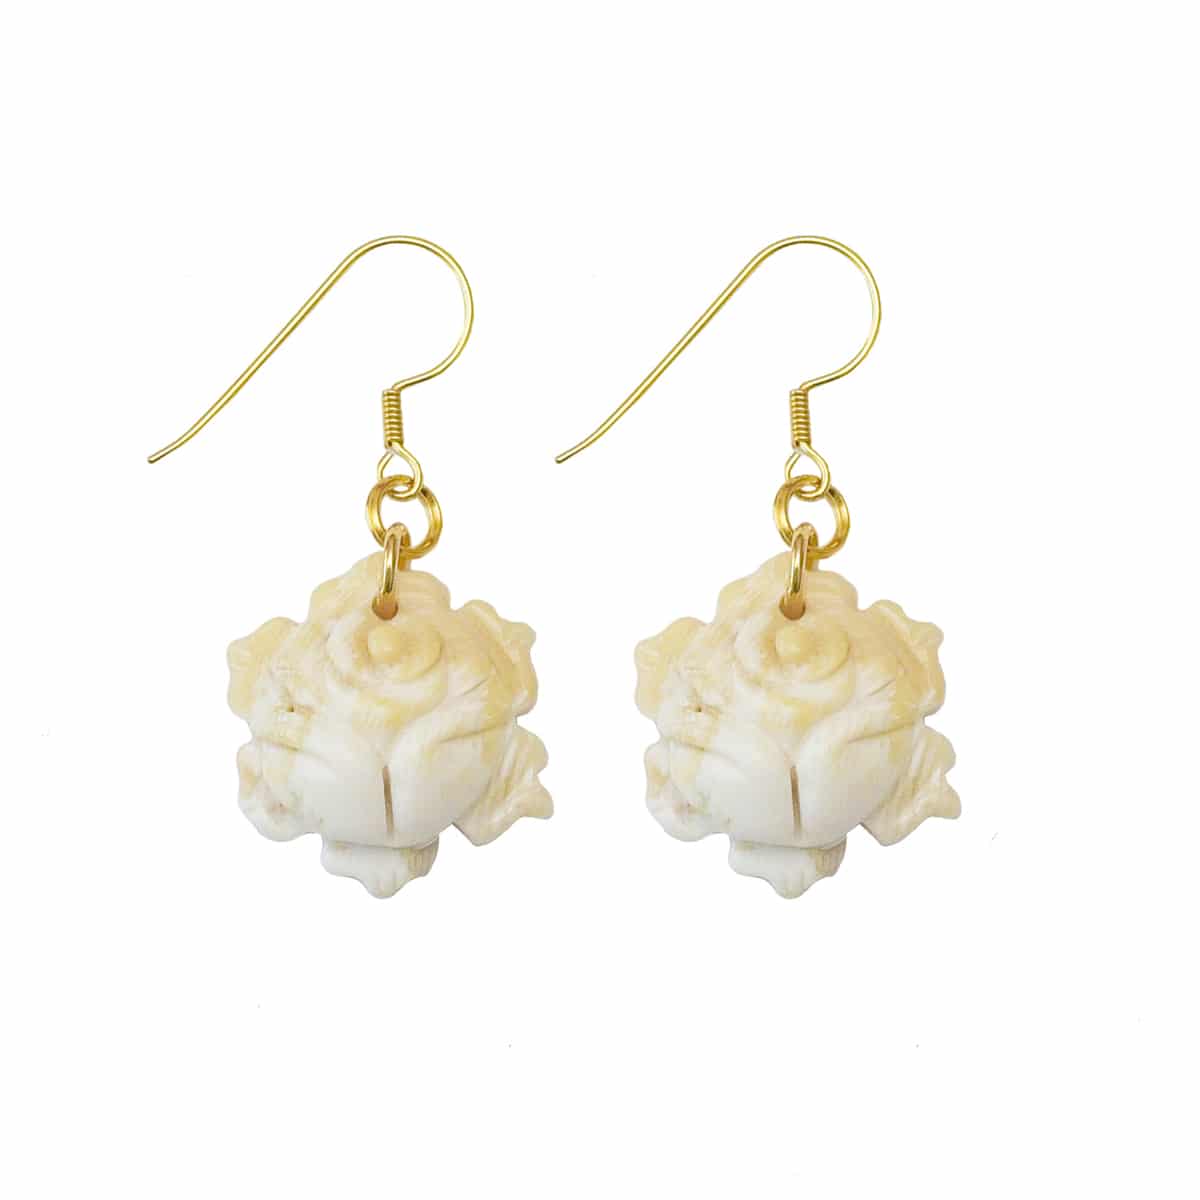 HONG BOCK-weiße koralle  Rosen (ca20mm) Ohrringe mit  Silberhaken